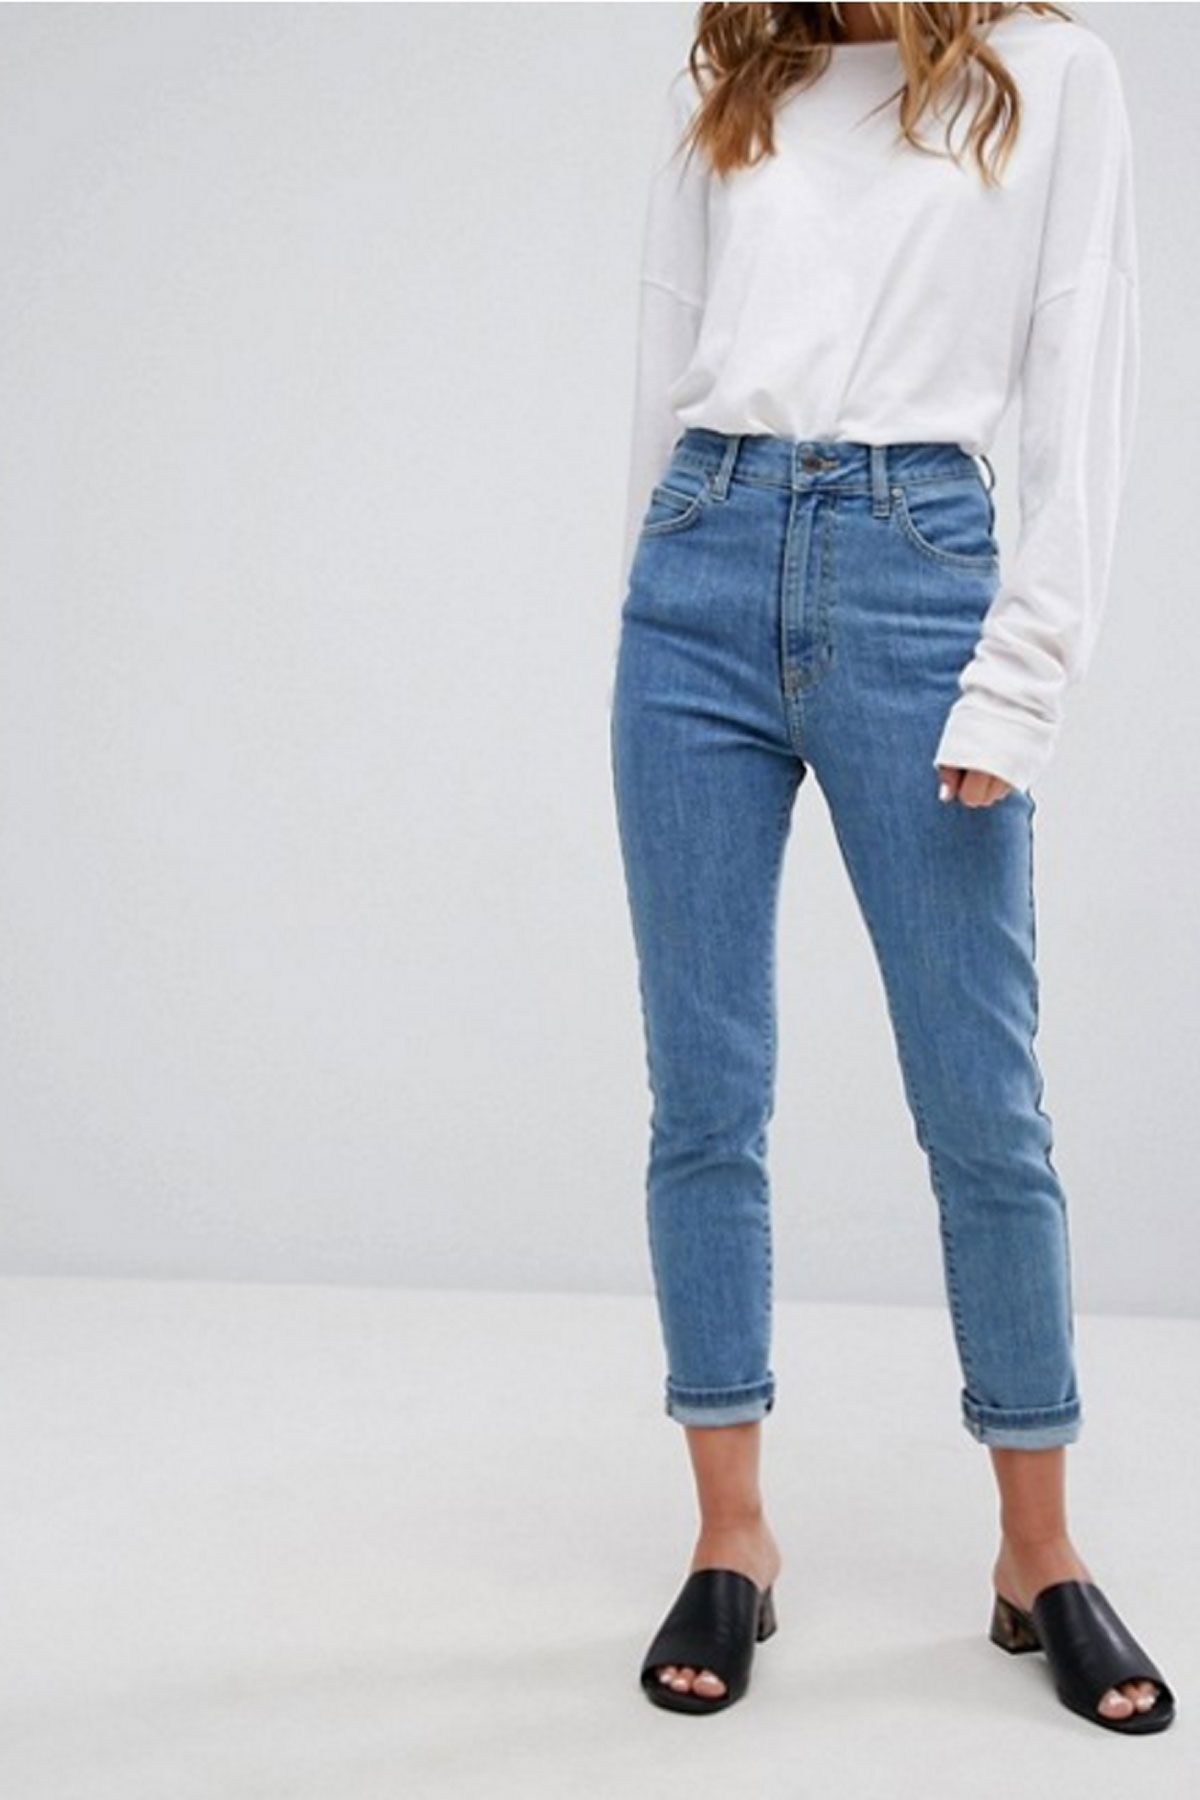 jeans cut style